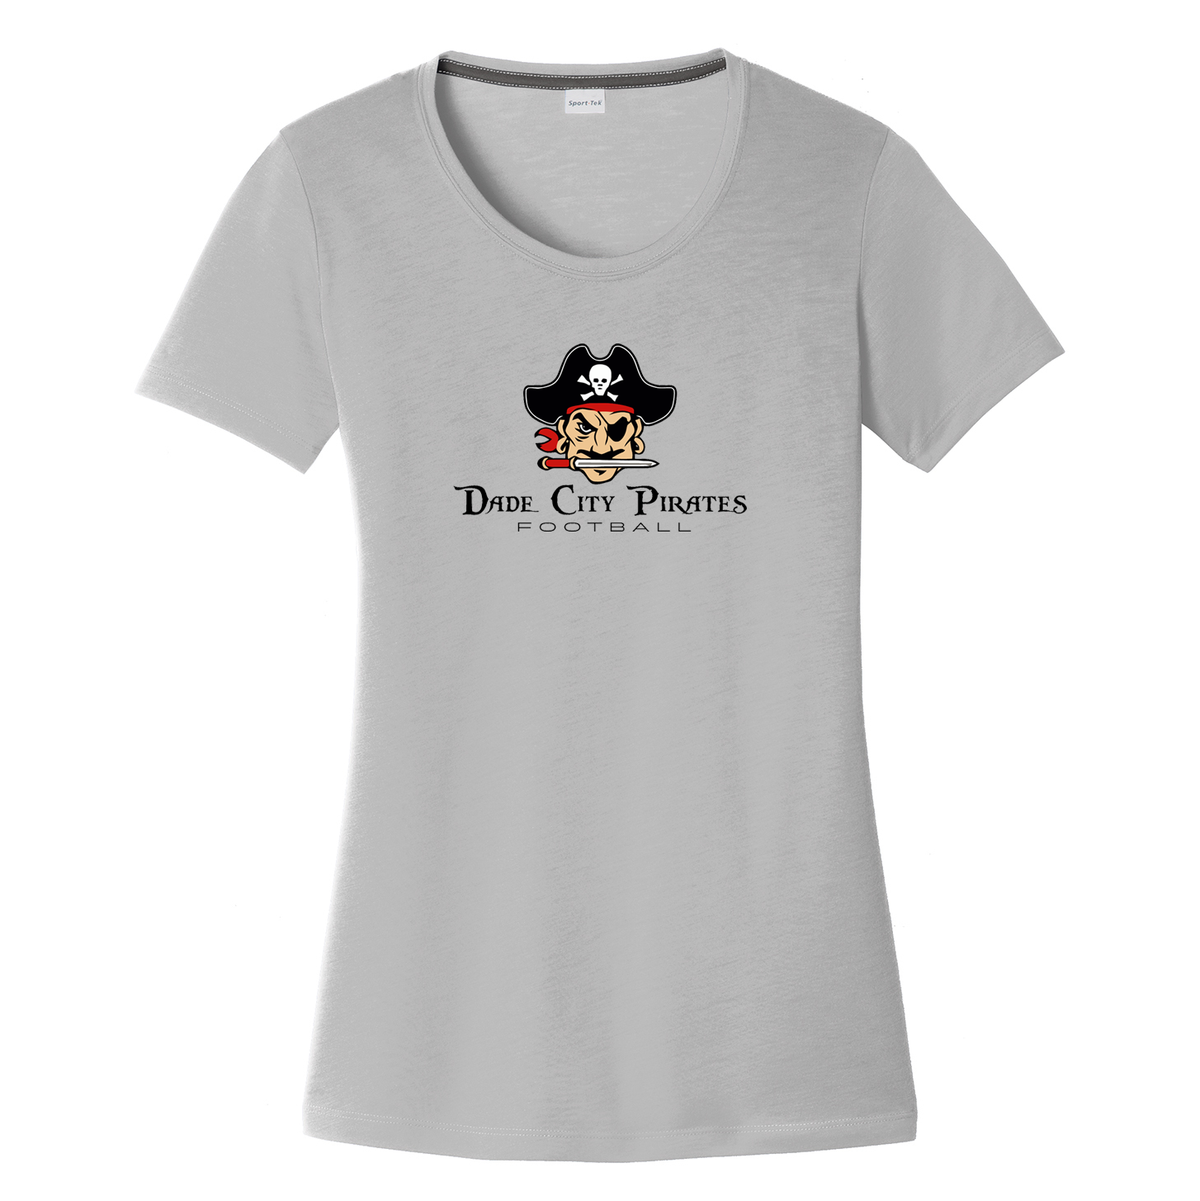 Dade City Pirates  Women's CottonTouch Performance T-Shirt